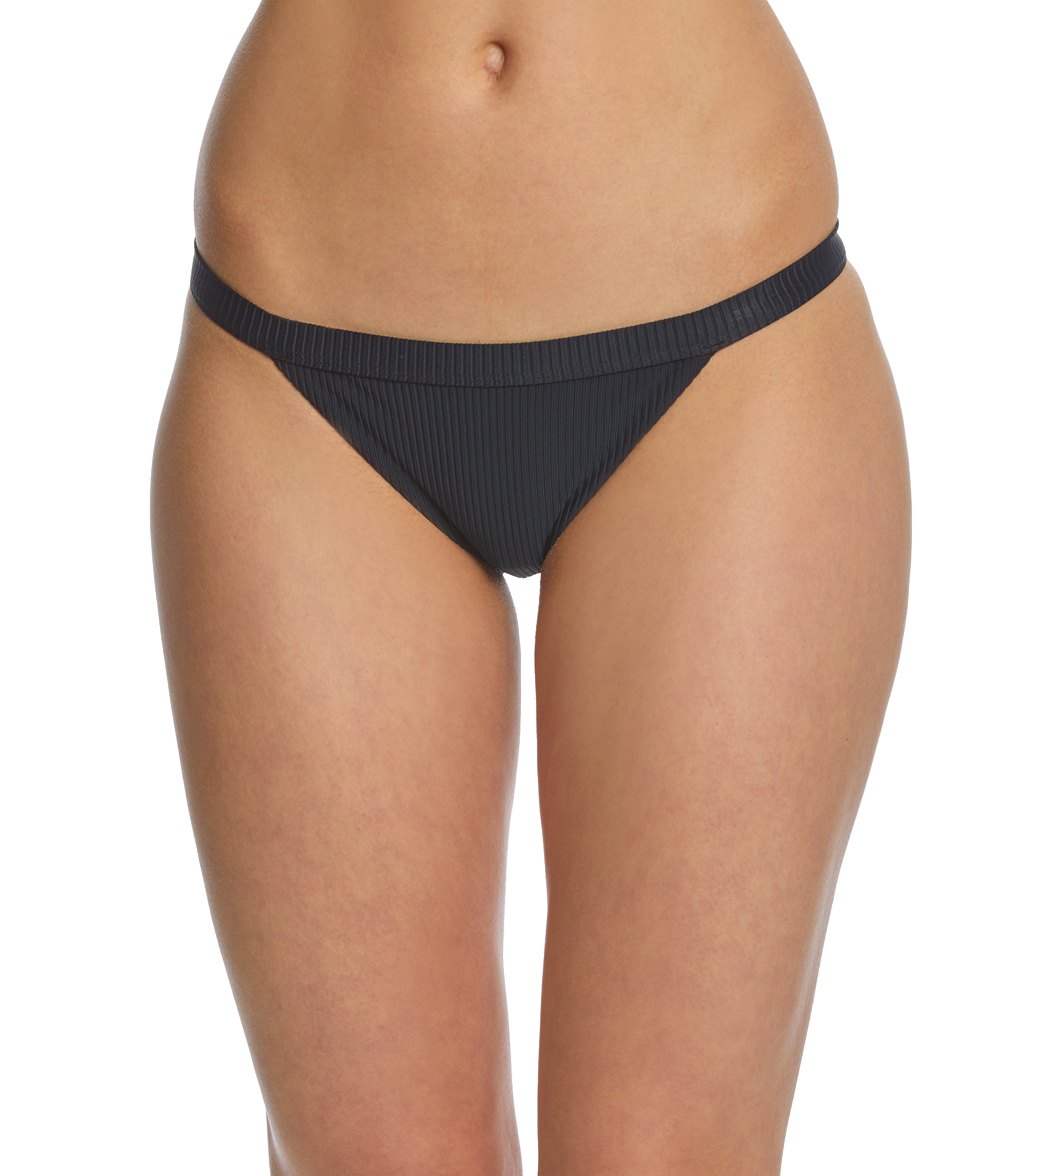 Nike Women's Ribbed Bikini Bottom at SwimOutlet.com